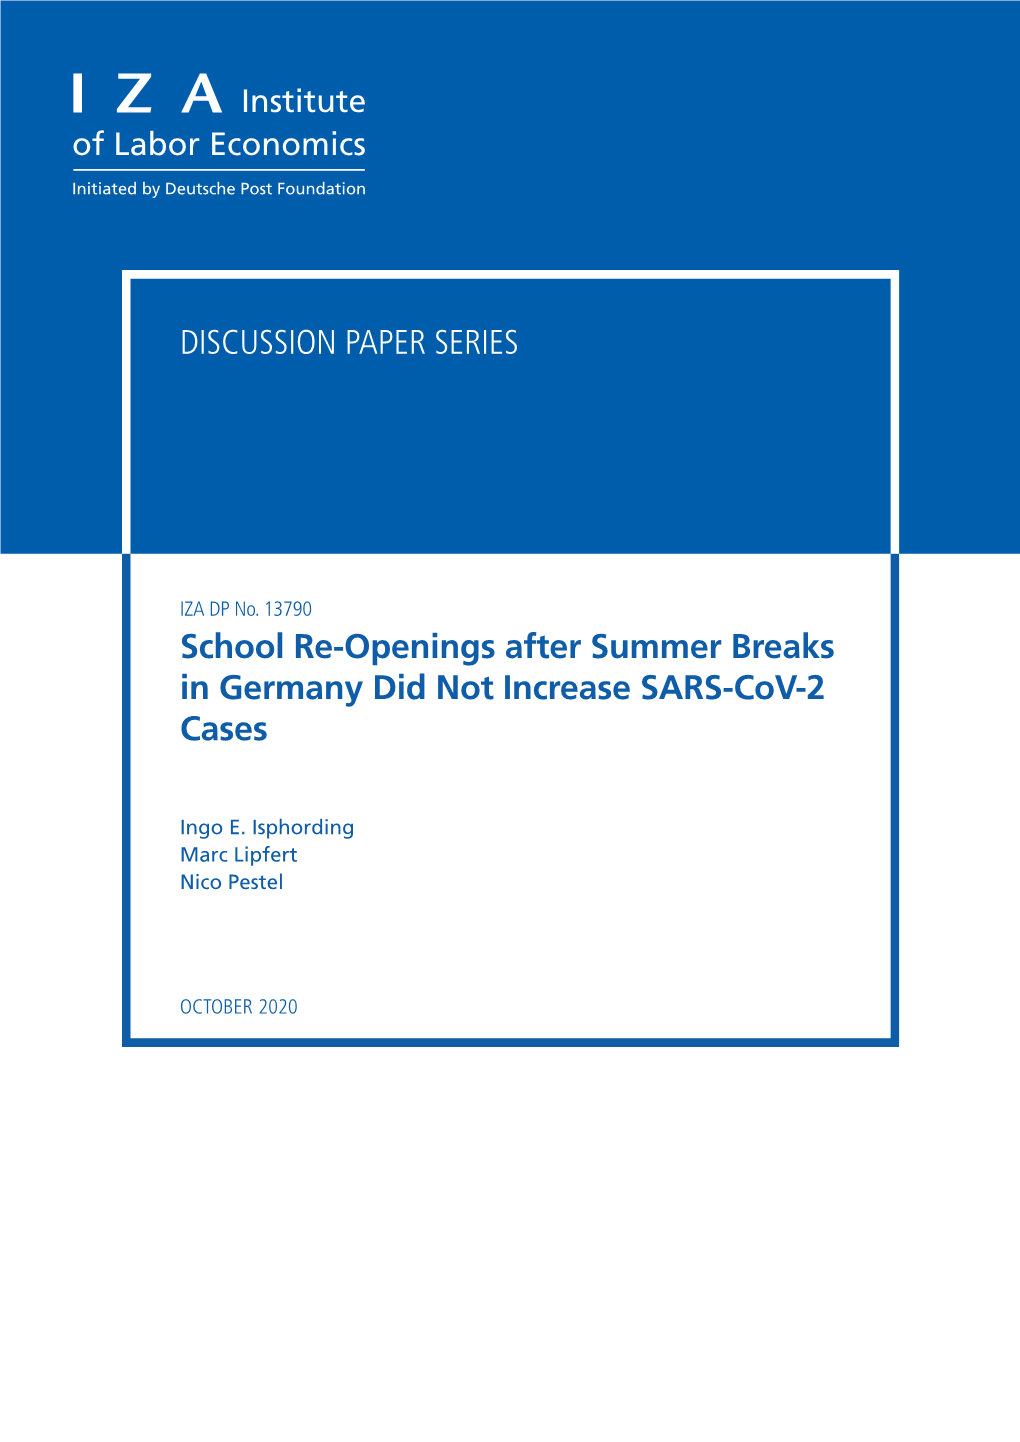 School Re-Openings After Summer Breaks in Germany Did Not Increase SARS-Cov-2 Cases